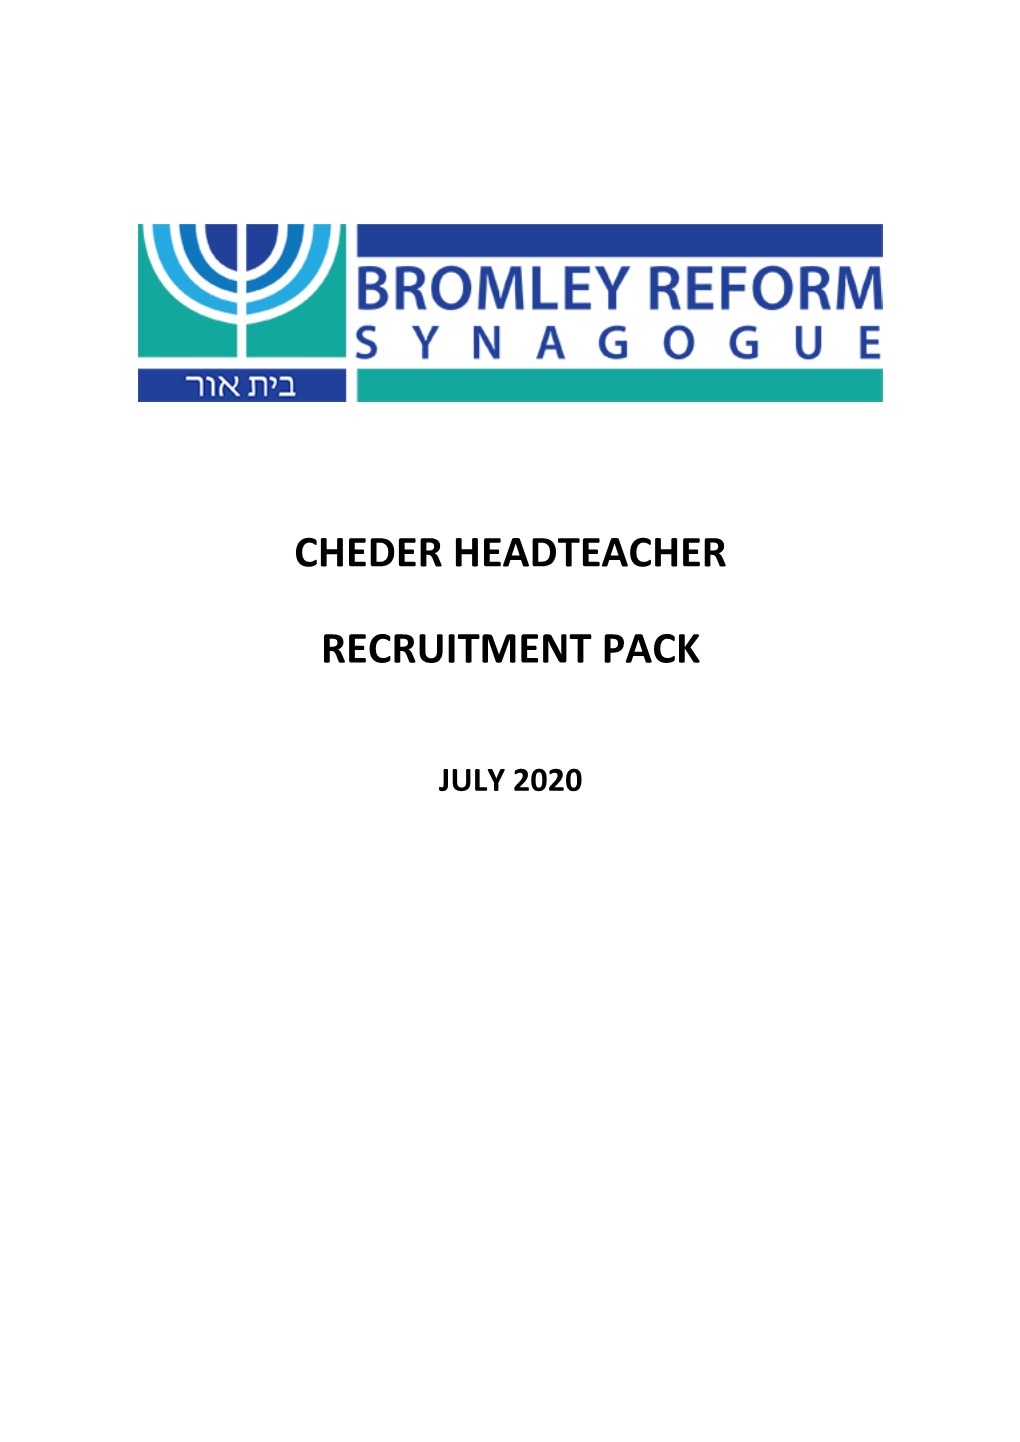 Cheder Headteacher Recruitment Pack